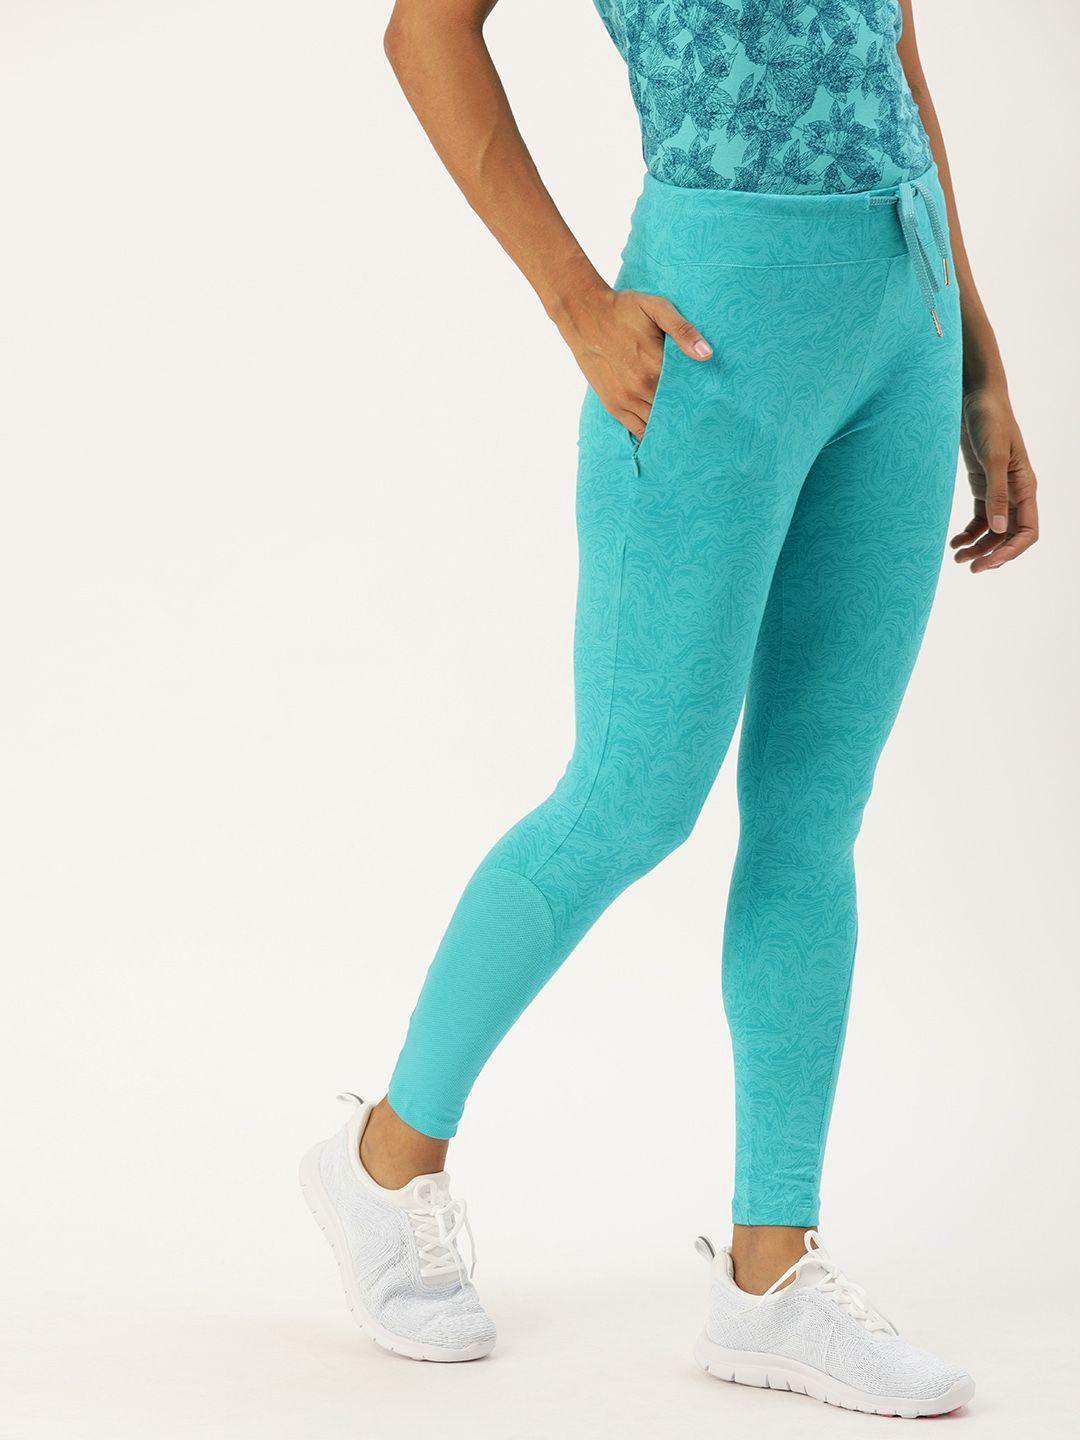 jockey woman's teal blue solid yoga pants